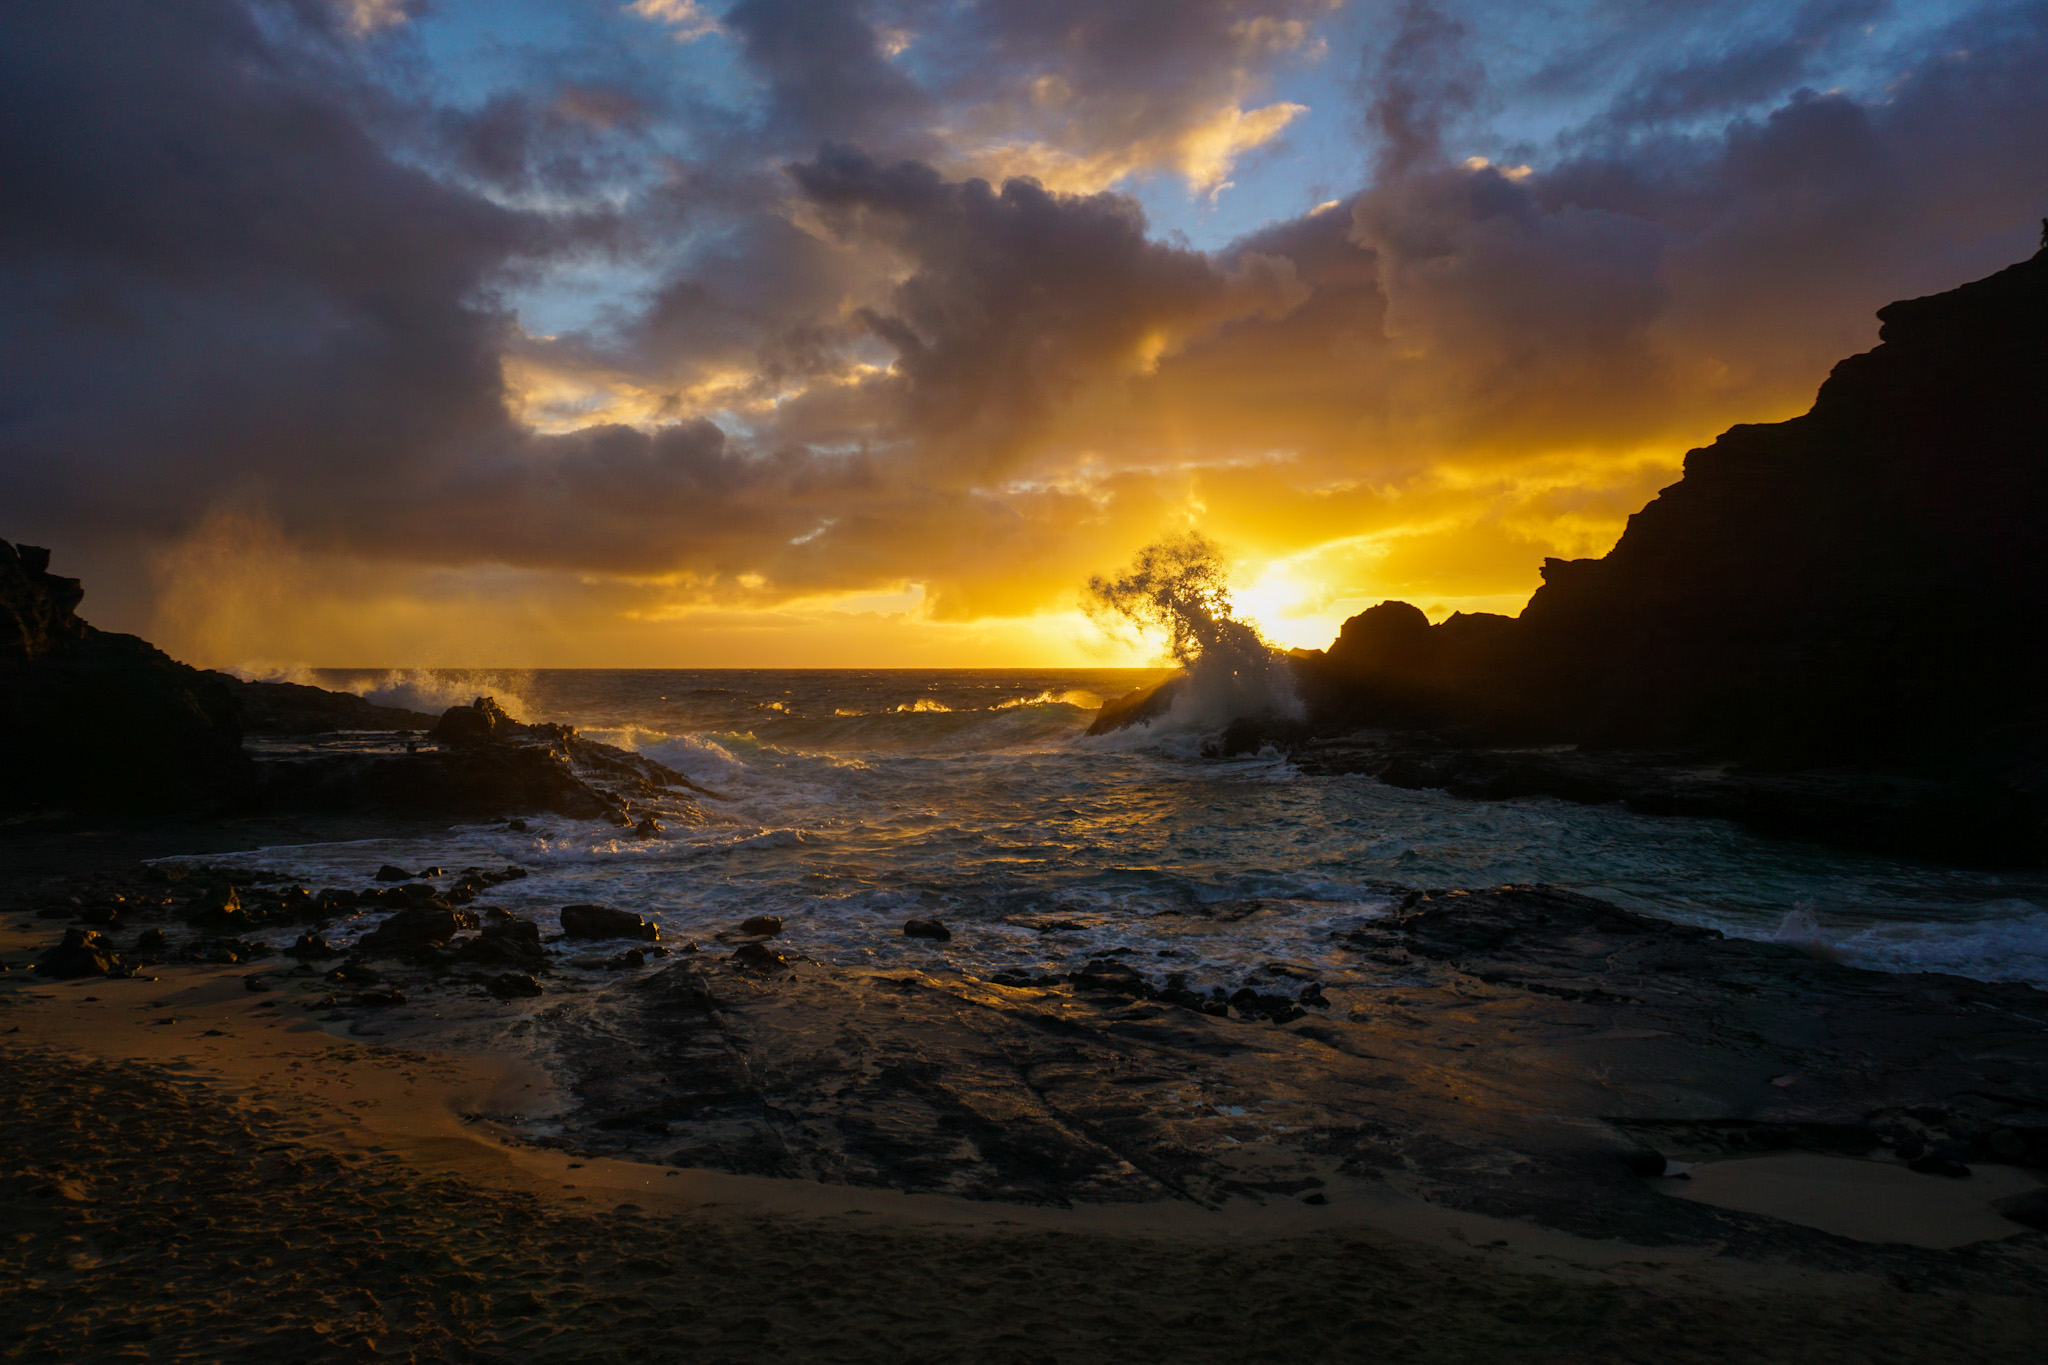 Sunrise at Halona Cove Eternity Beach, Oahu, Hawaii